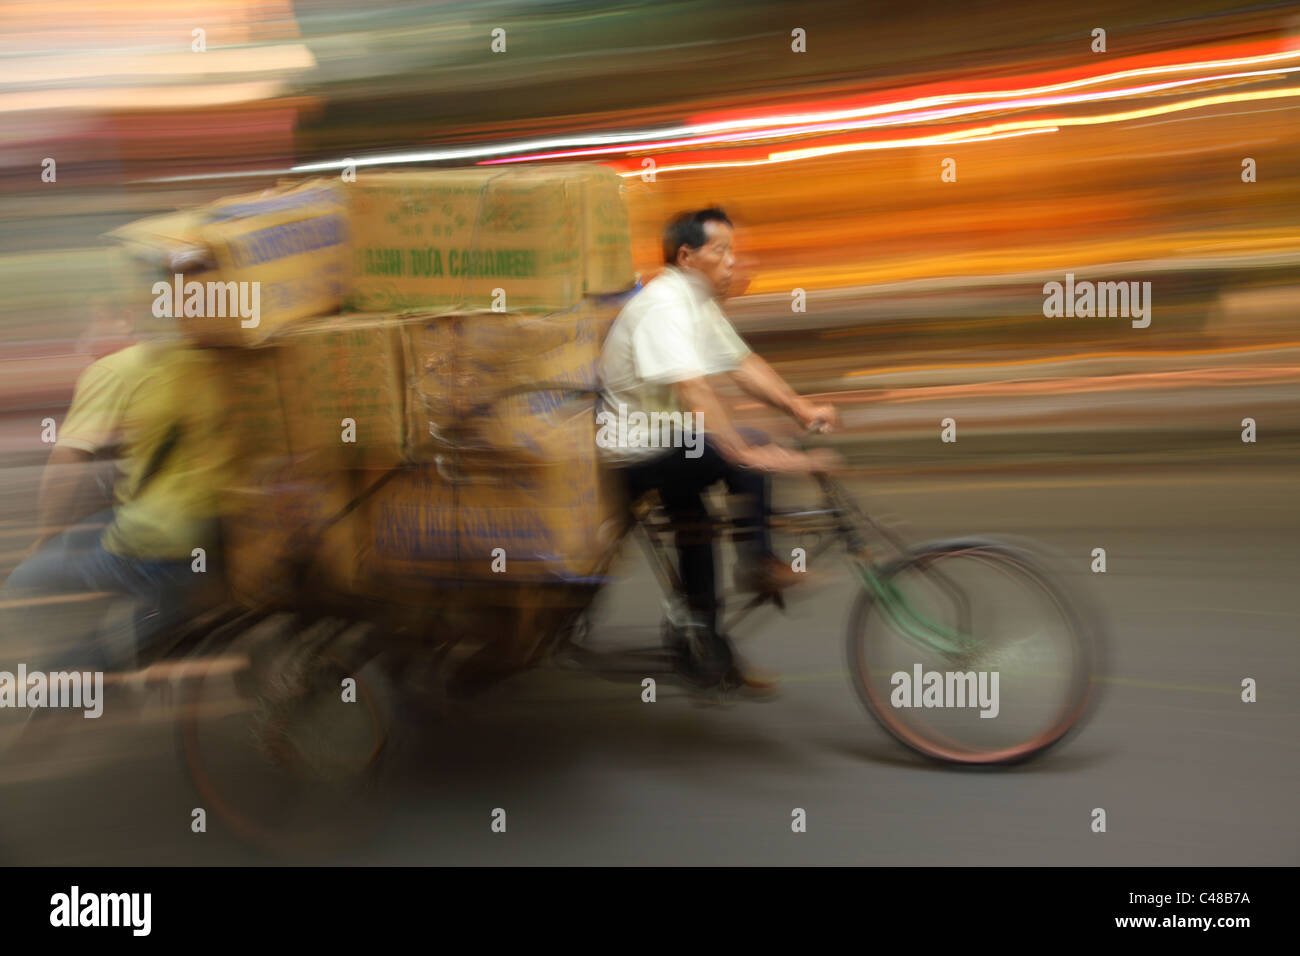 Blurred rickshaw, Guangzhou, China Stock Photo